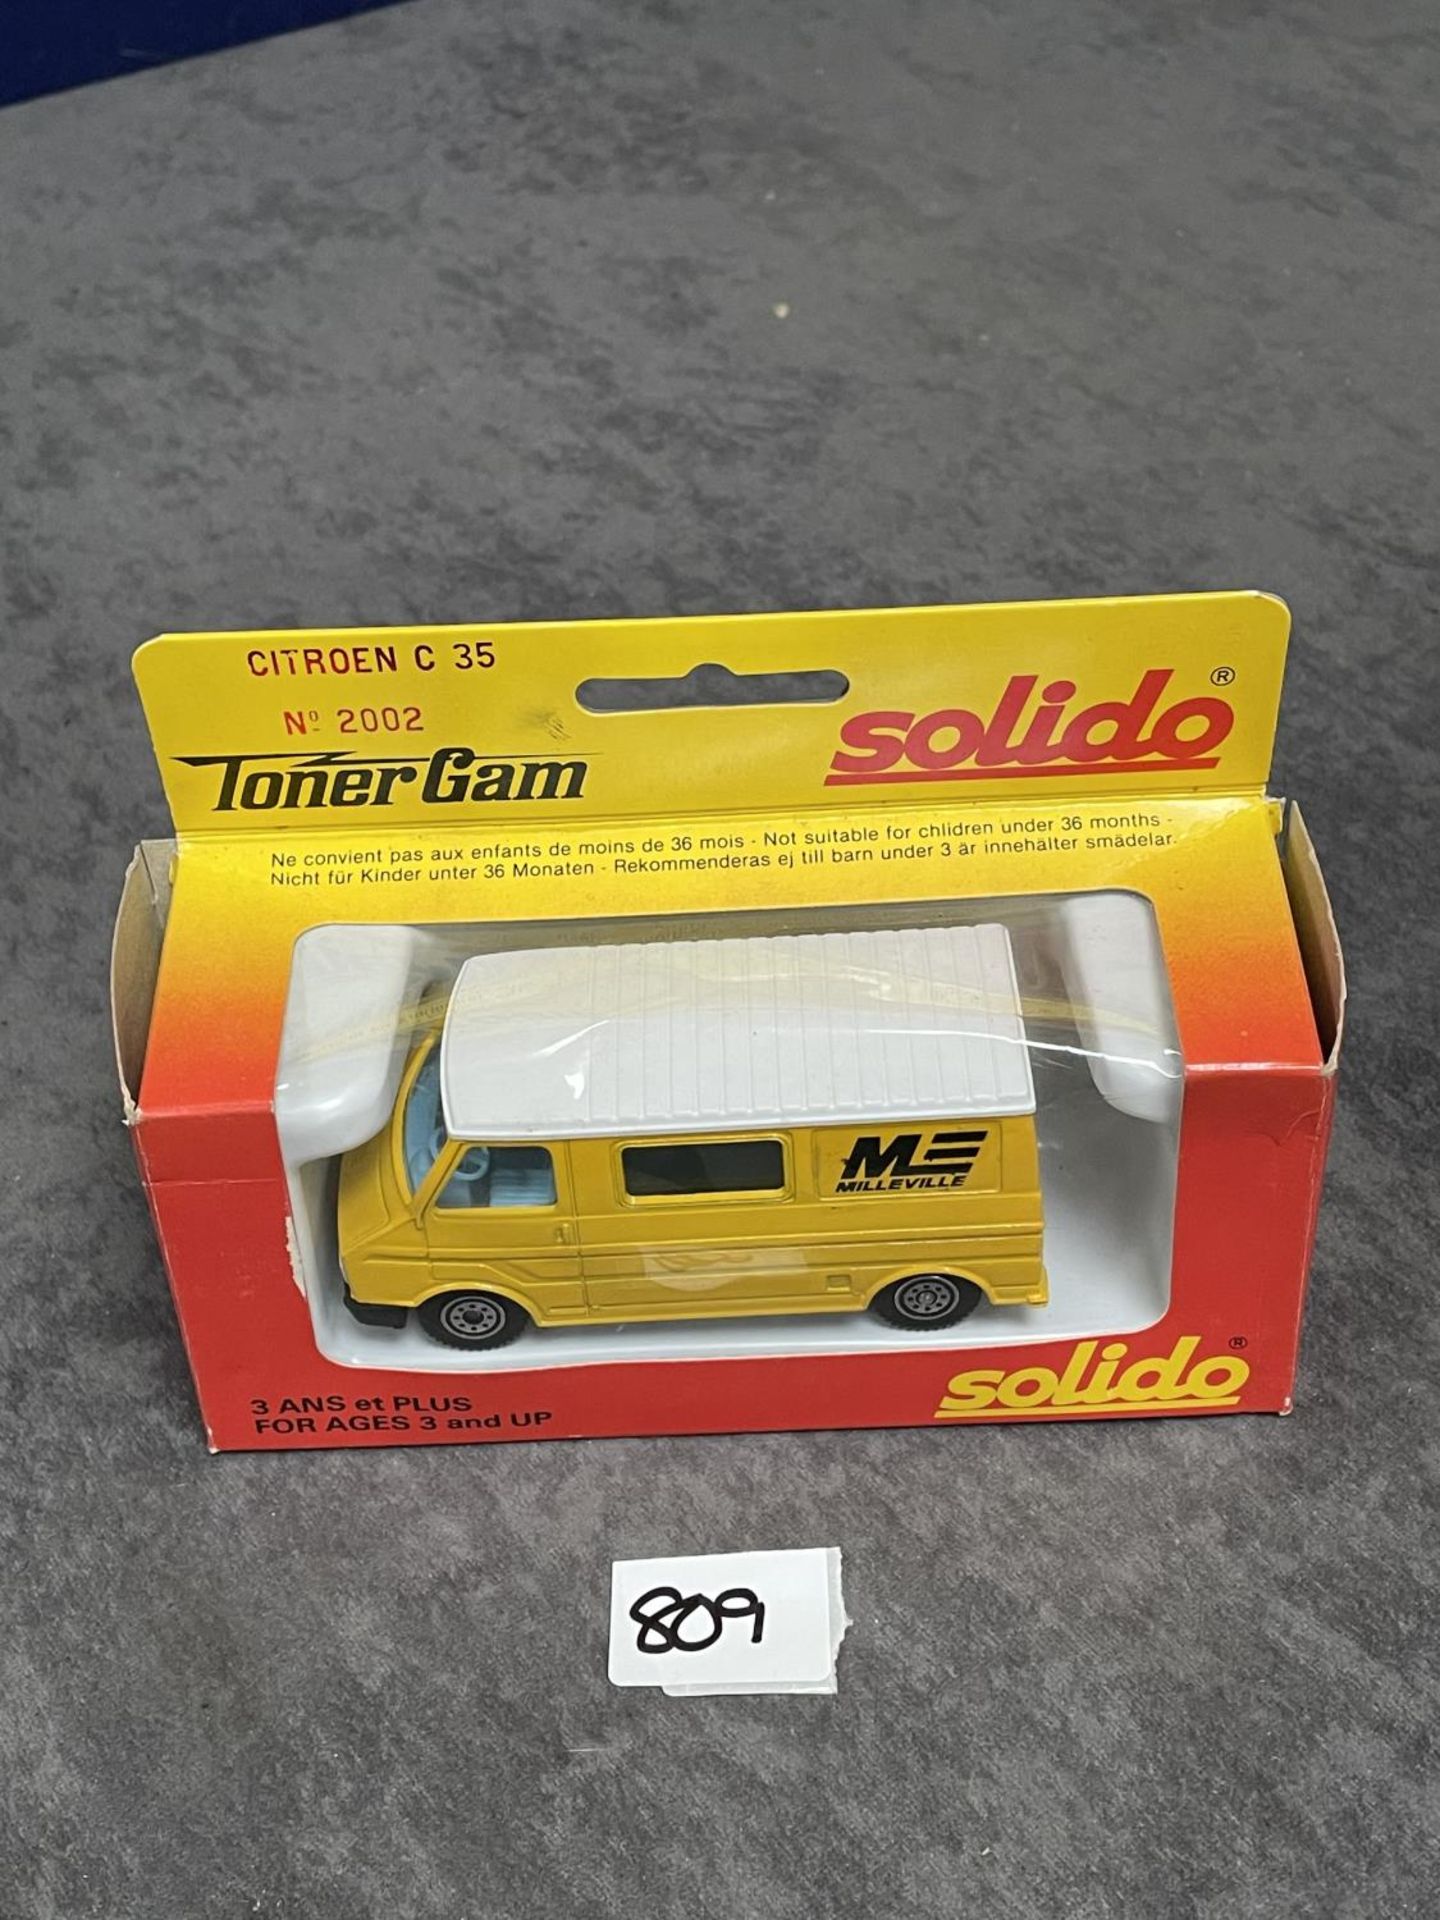 Solido Toner Gam #2002 Citroen C 35 Milleville Decal In Box